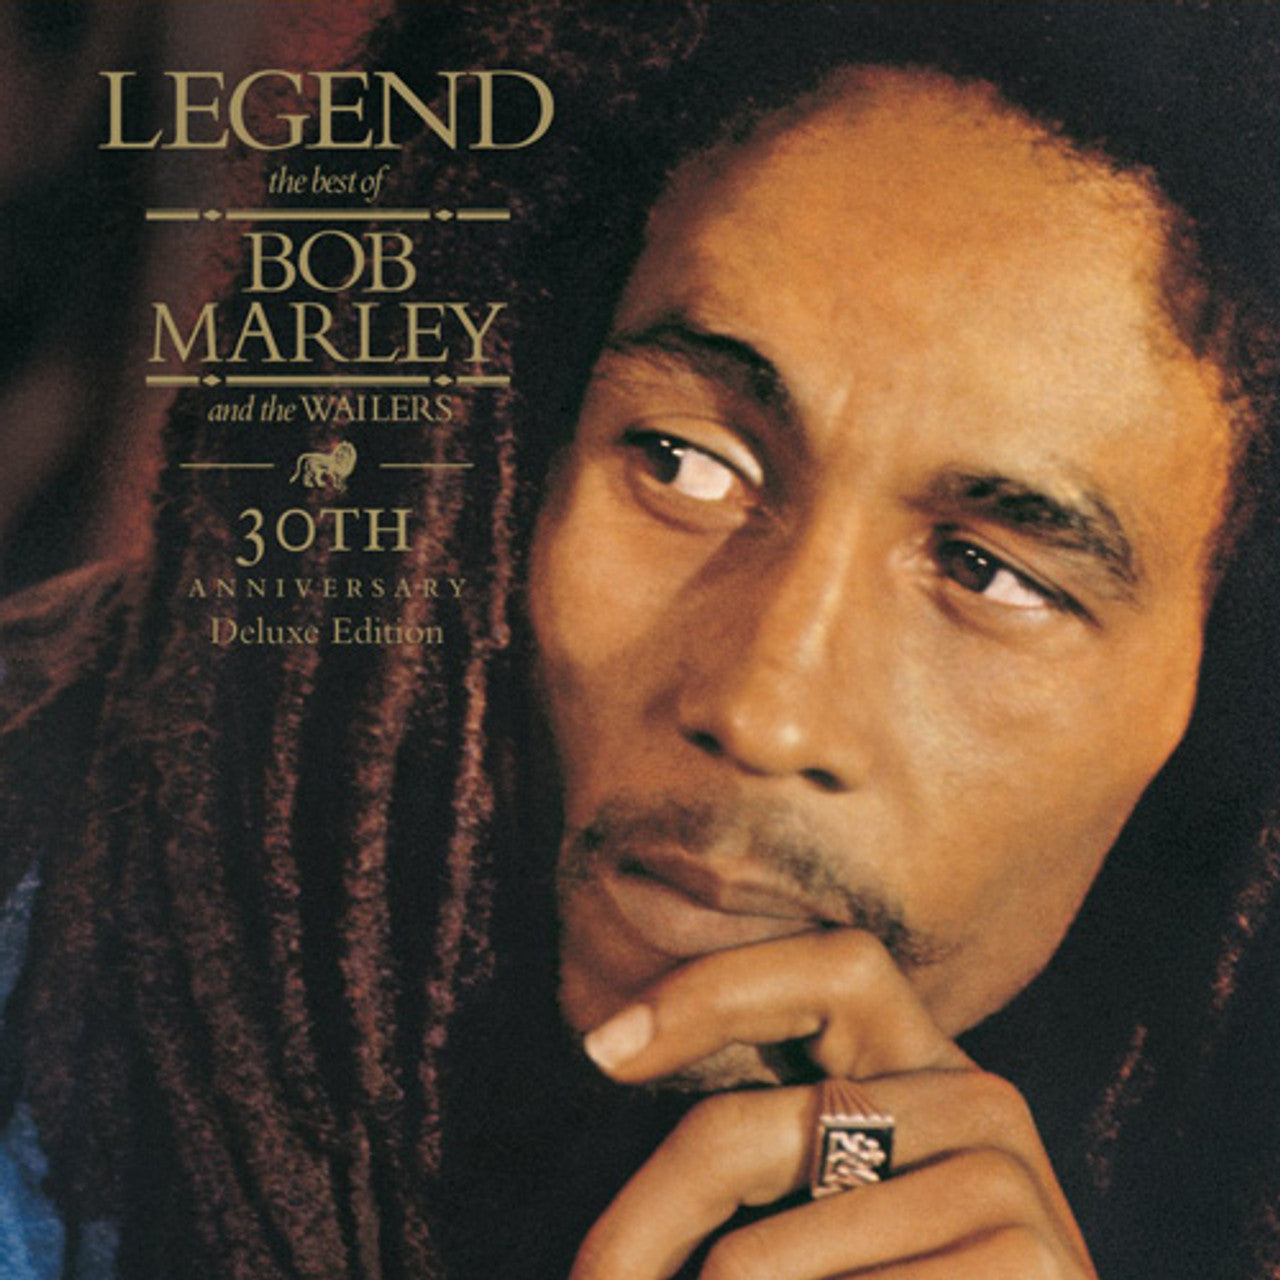 Bob Marley &amp; the Wailers - Legend - Tuff Gong LP